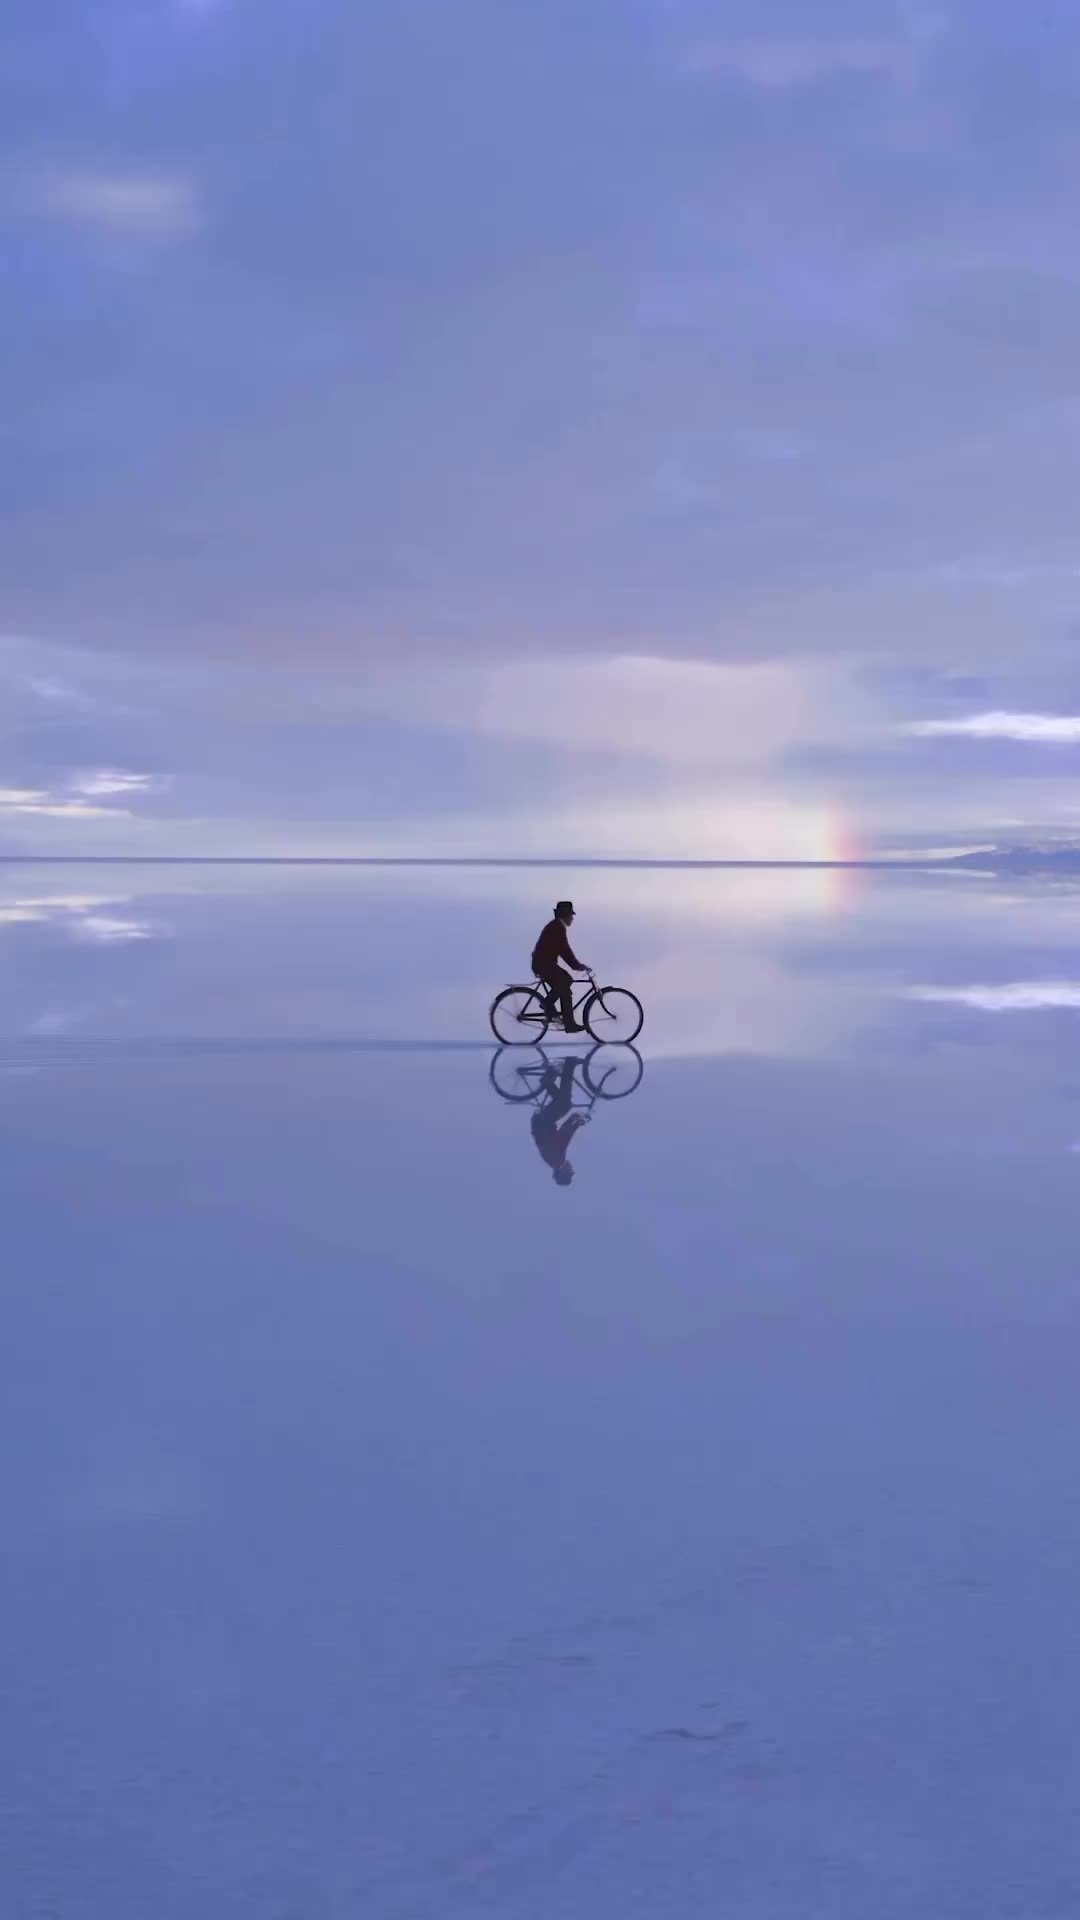 Cycling on the World's Largest Mirror - Salar de Uyuni